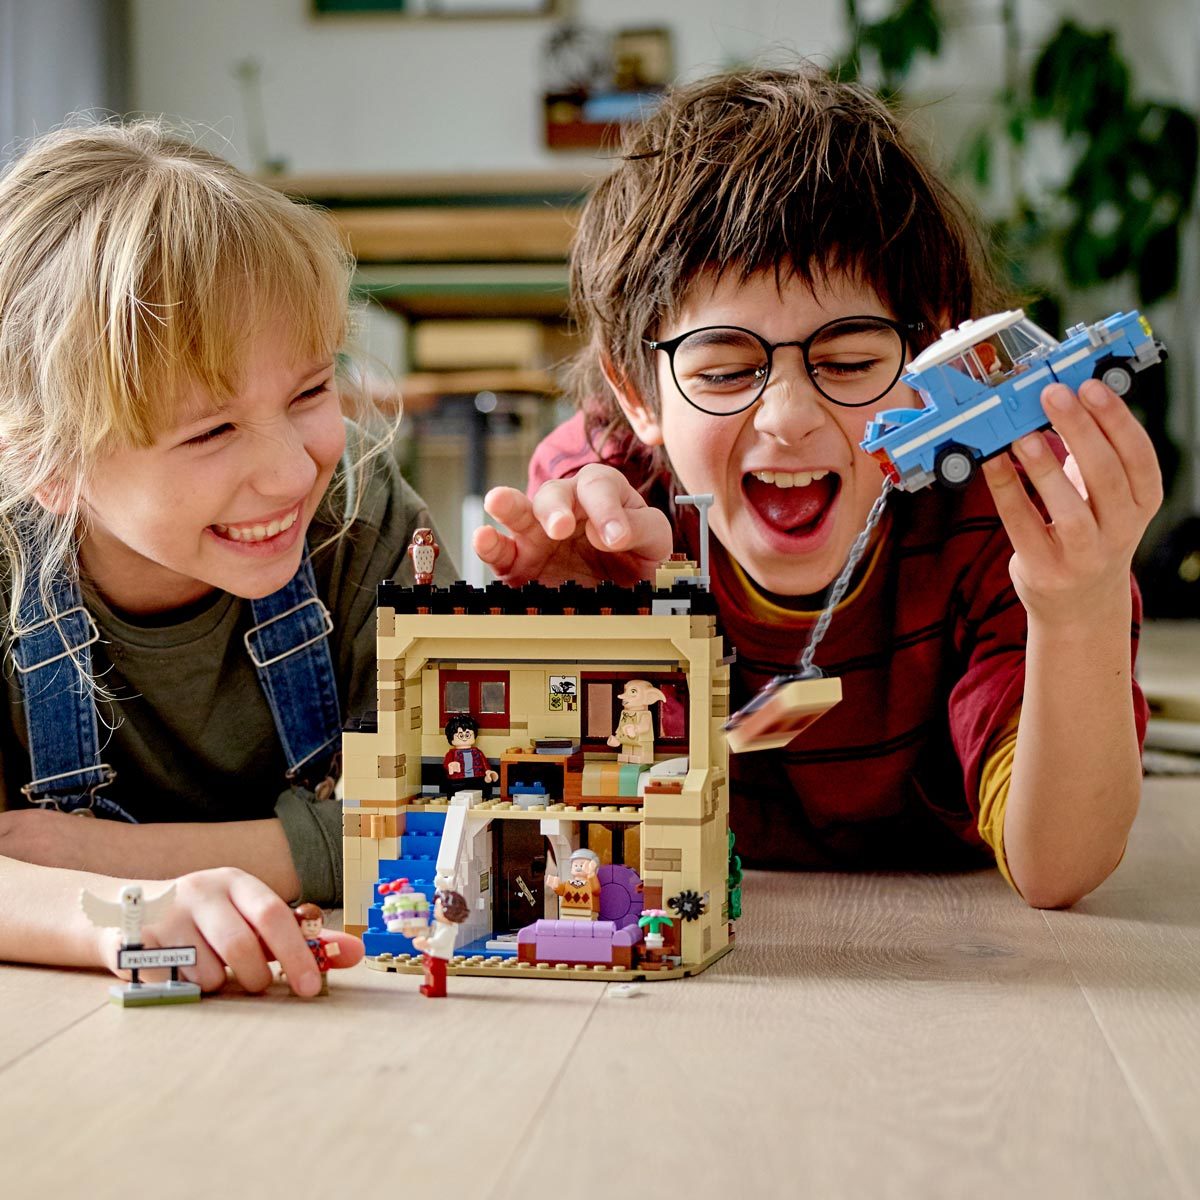 LEGO Harry Potter 4 Privet Drive House - Model 75968 (8+ Years)